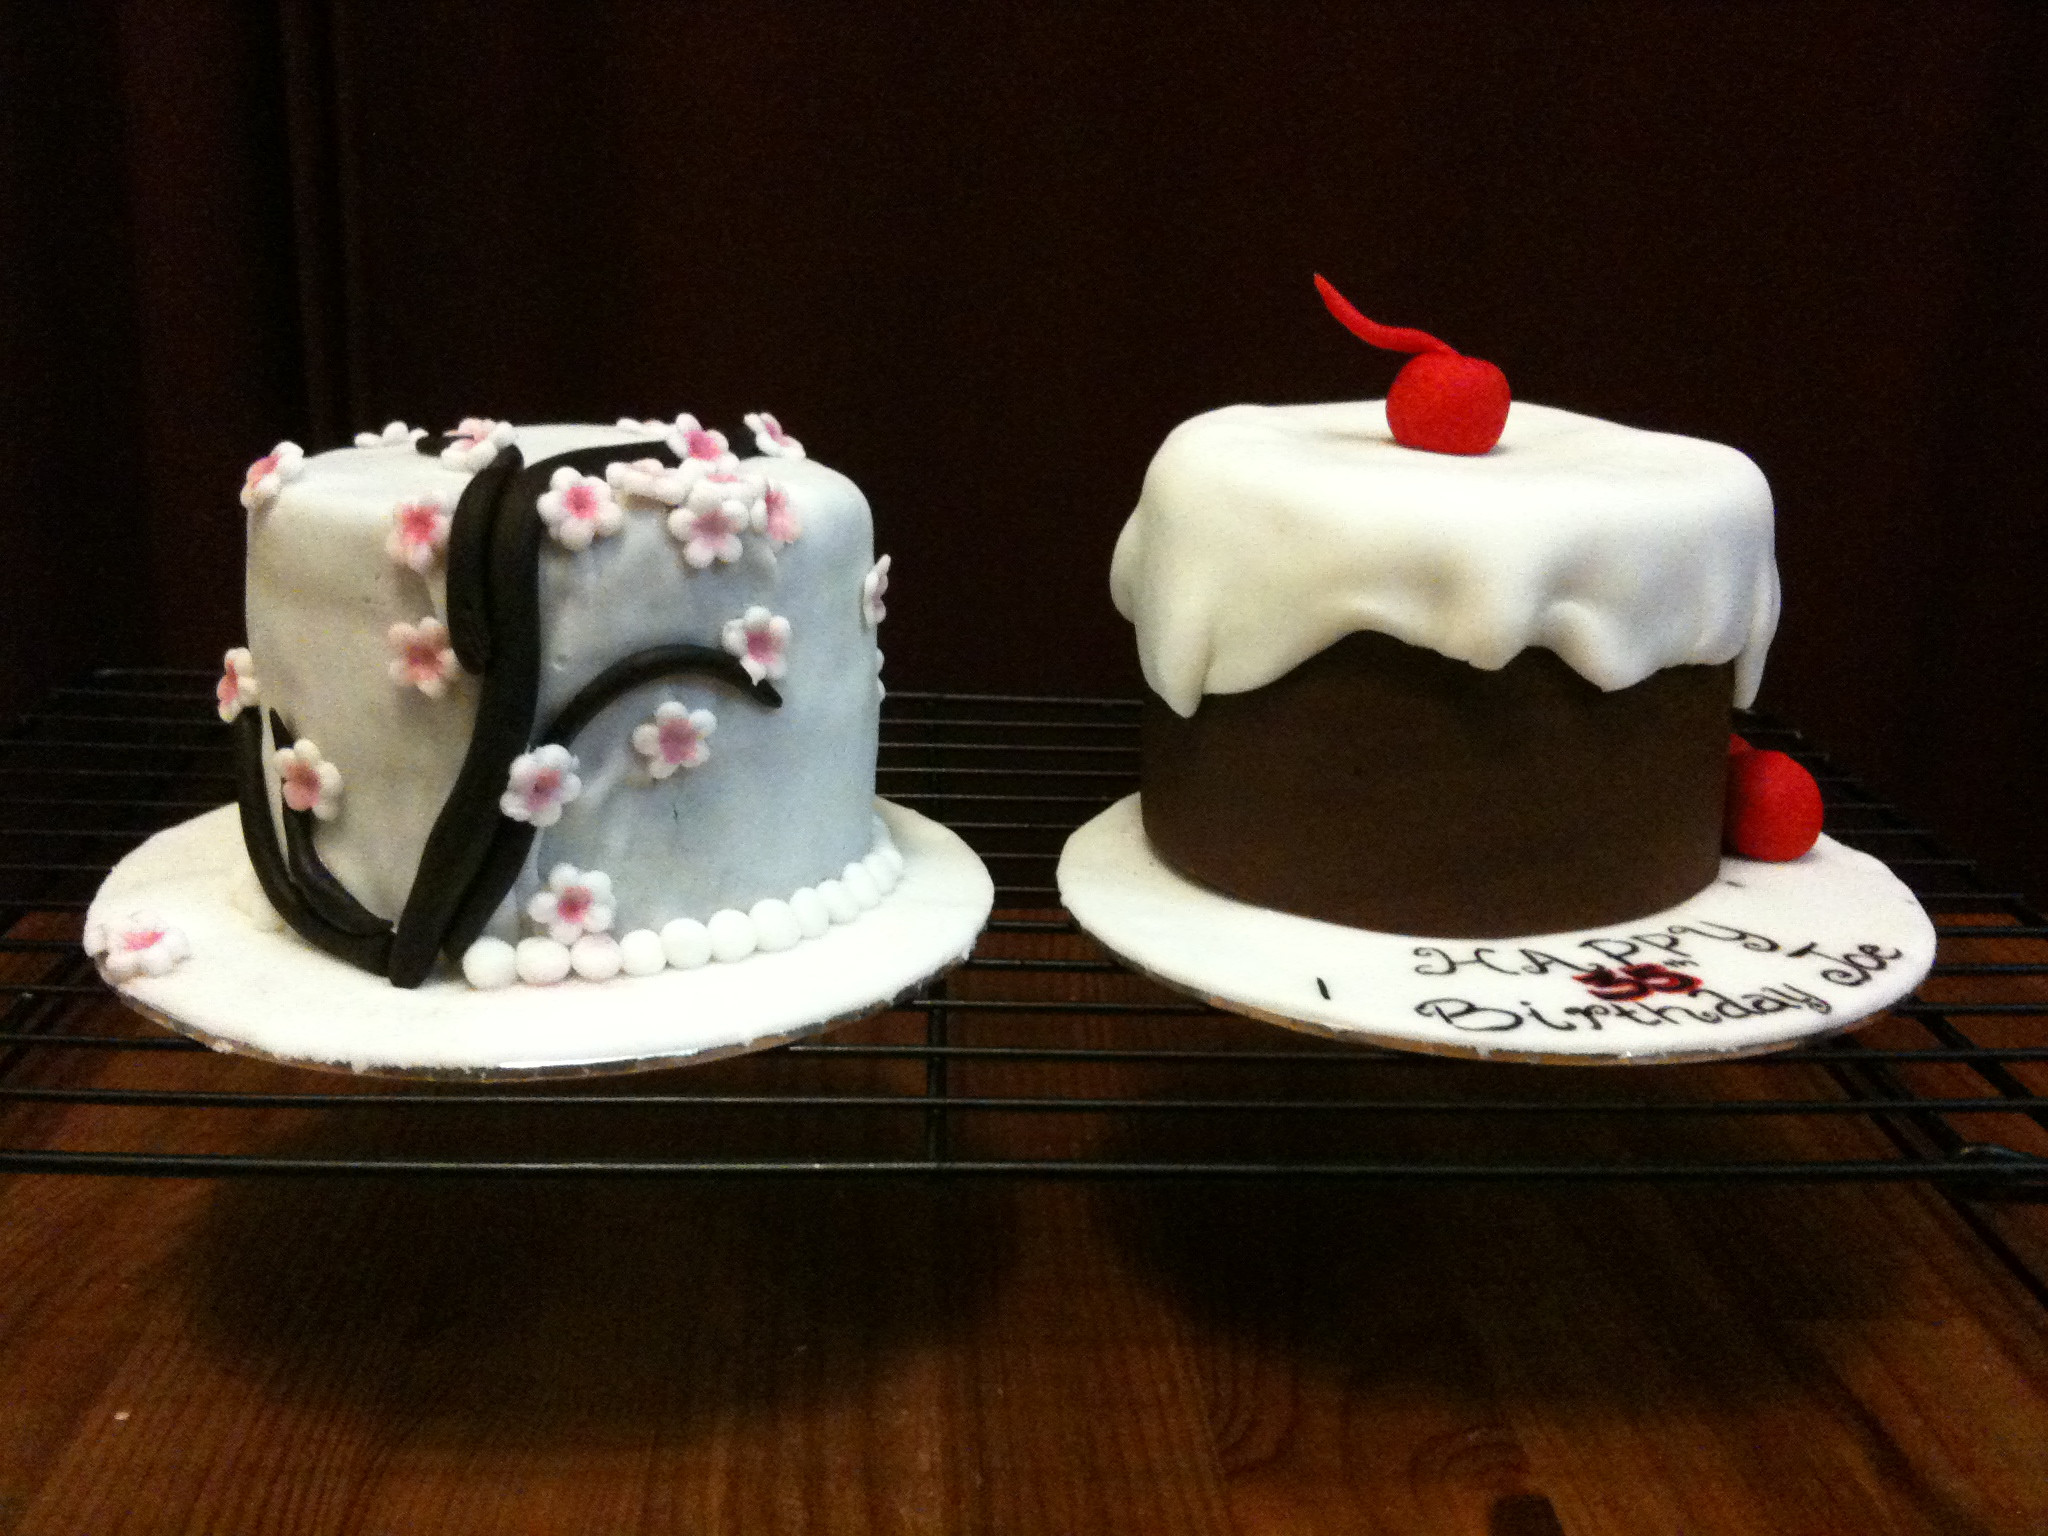 Best ideas about Mini Birthday Cake
. Save or Pin Mini Birthday Cakes Now.